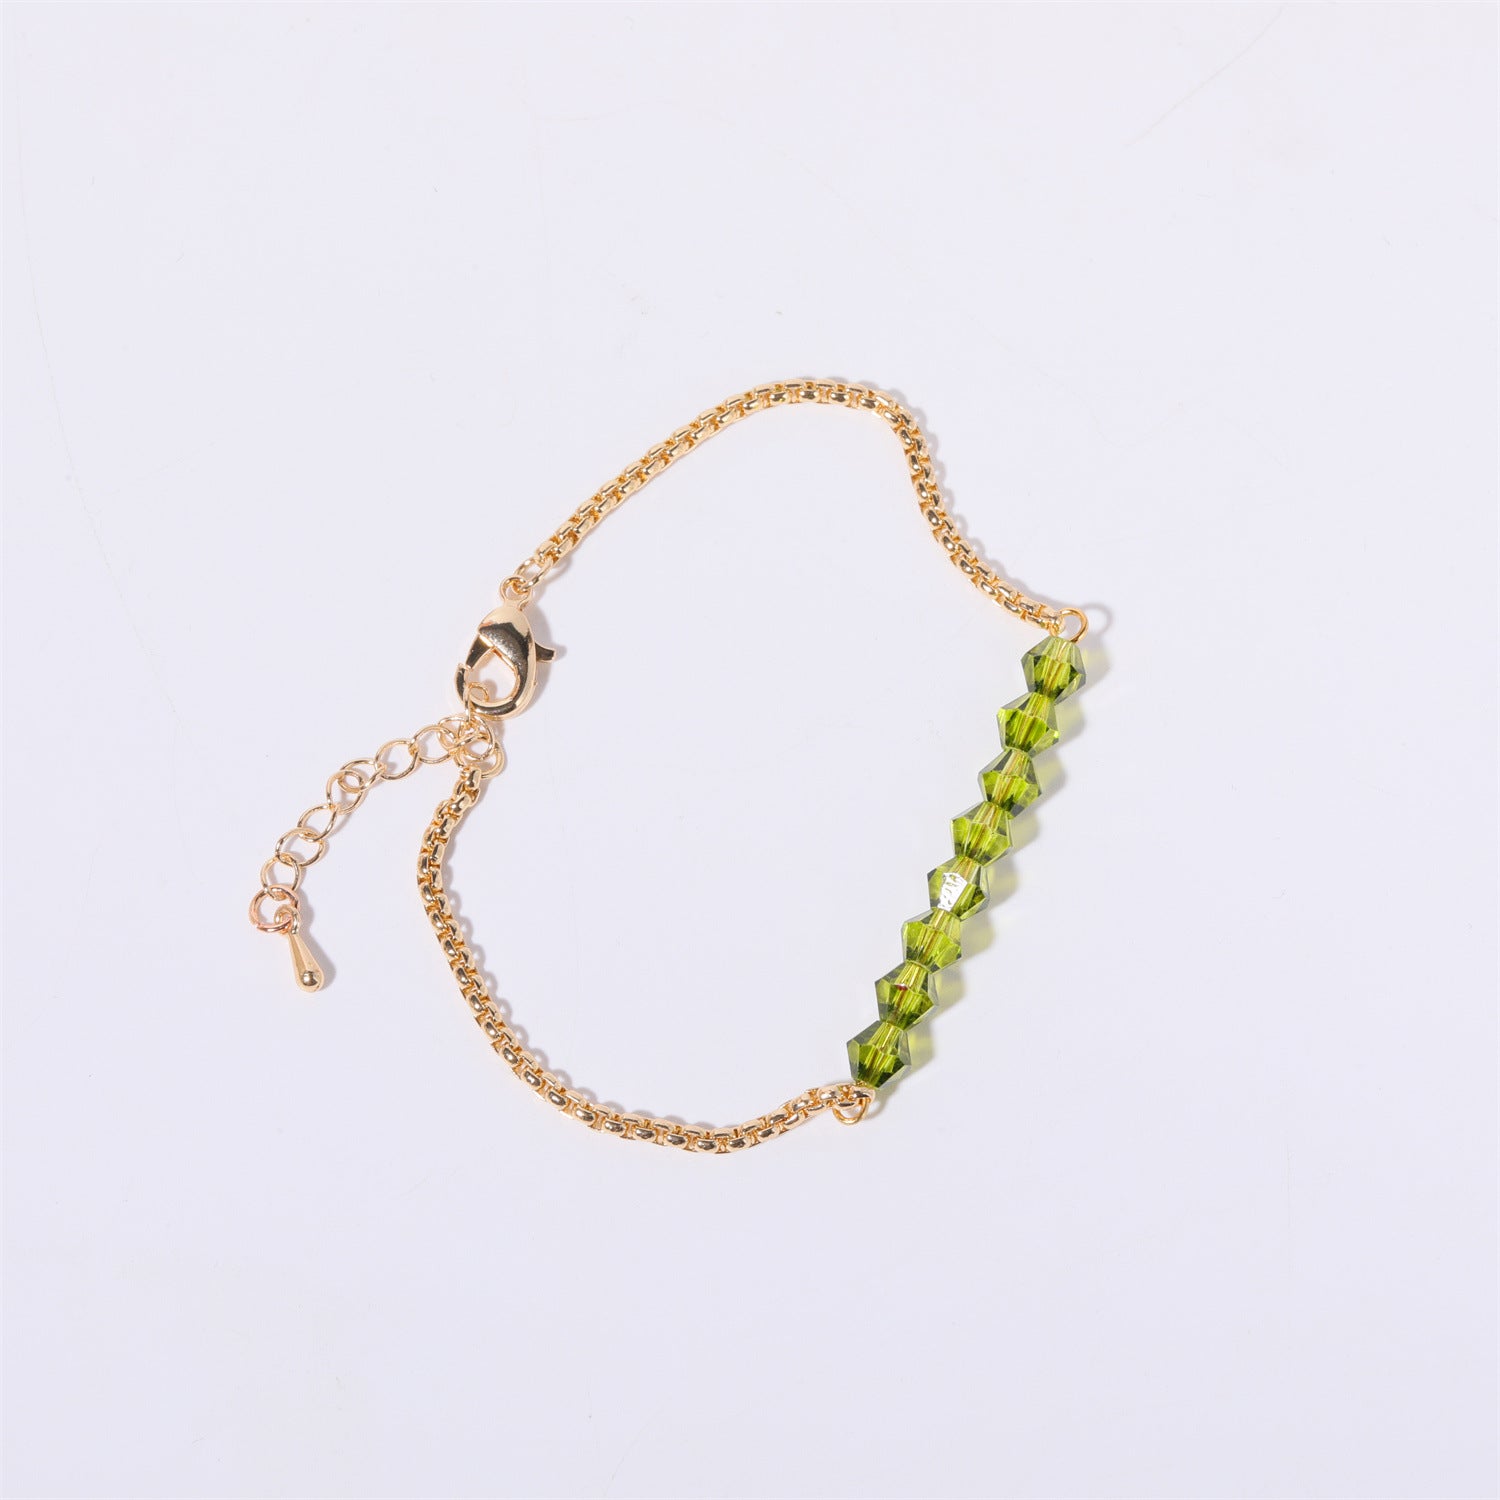 18K Gold Birthstone Beads Chain Bracelet